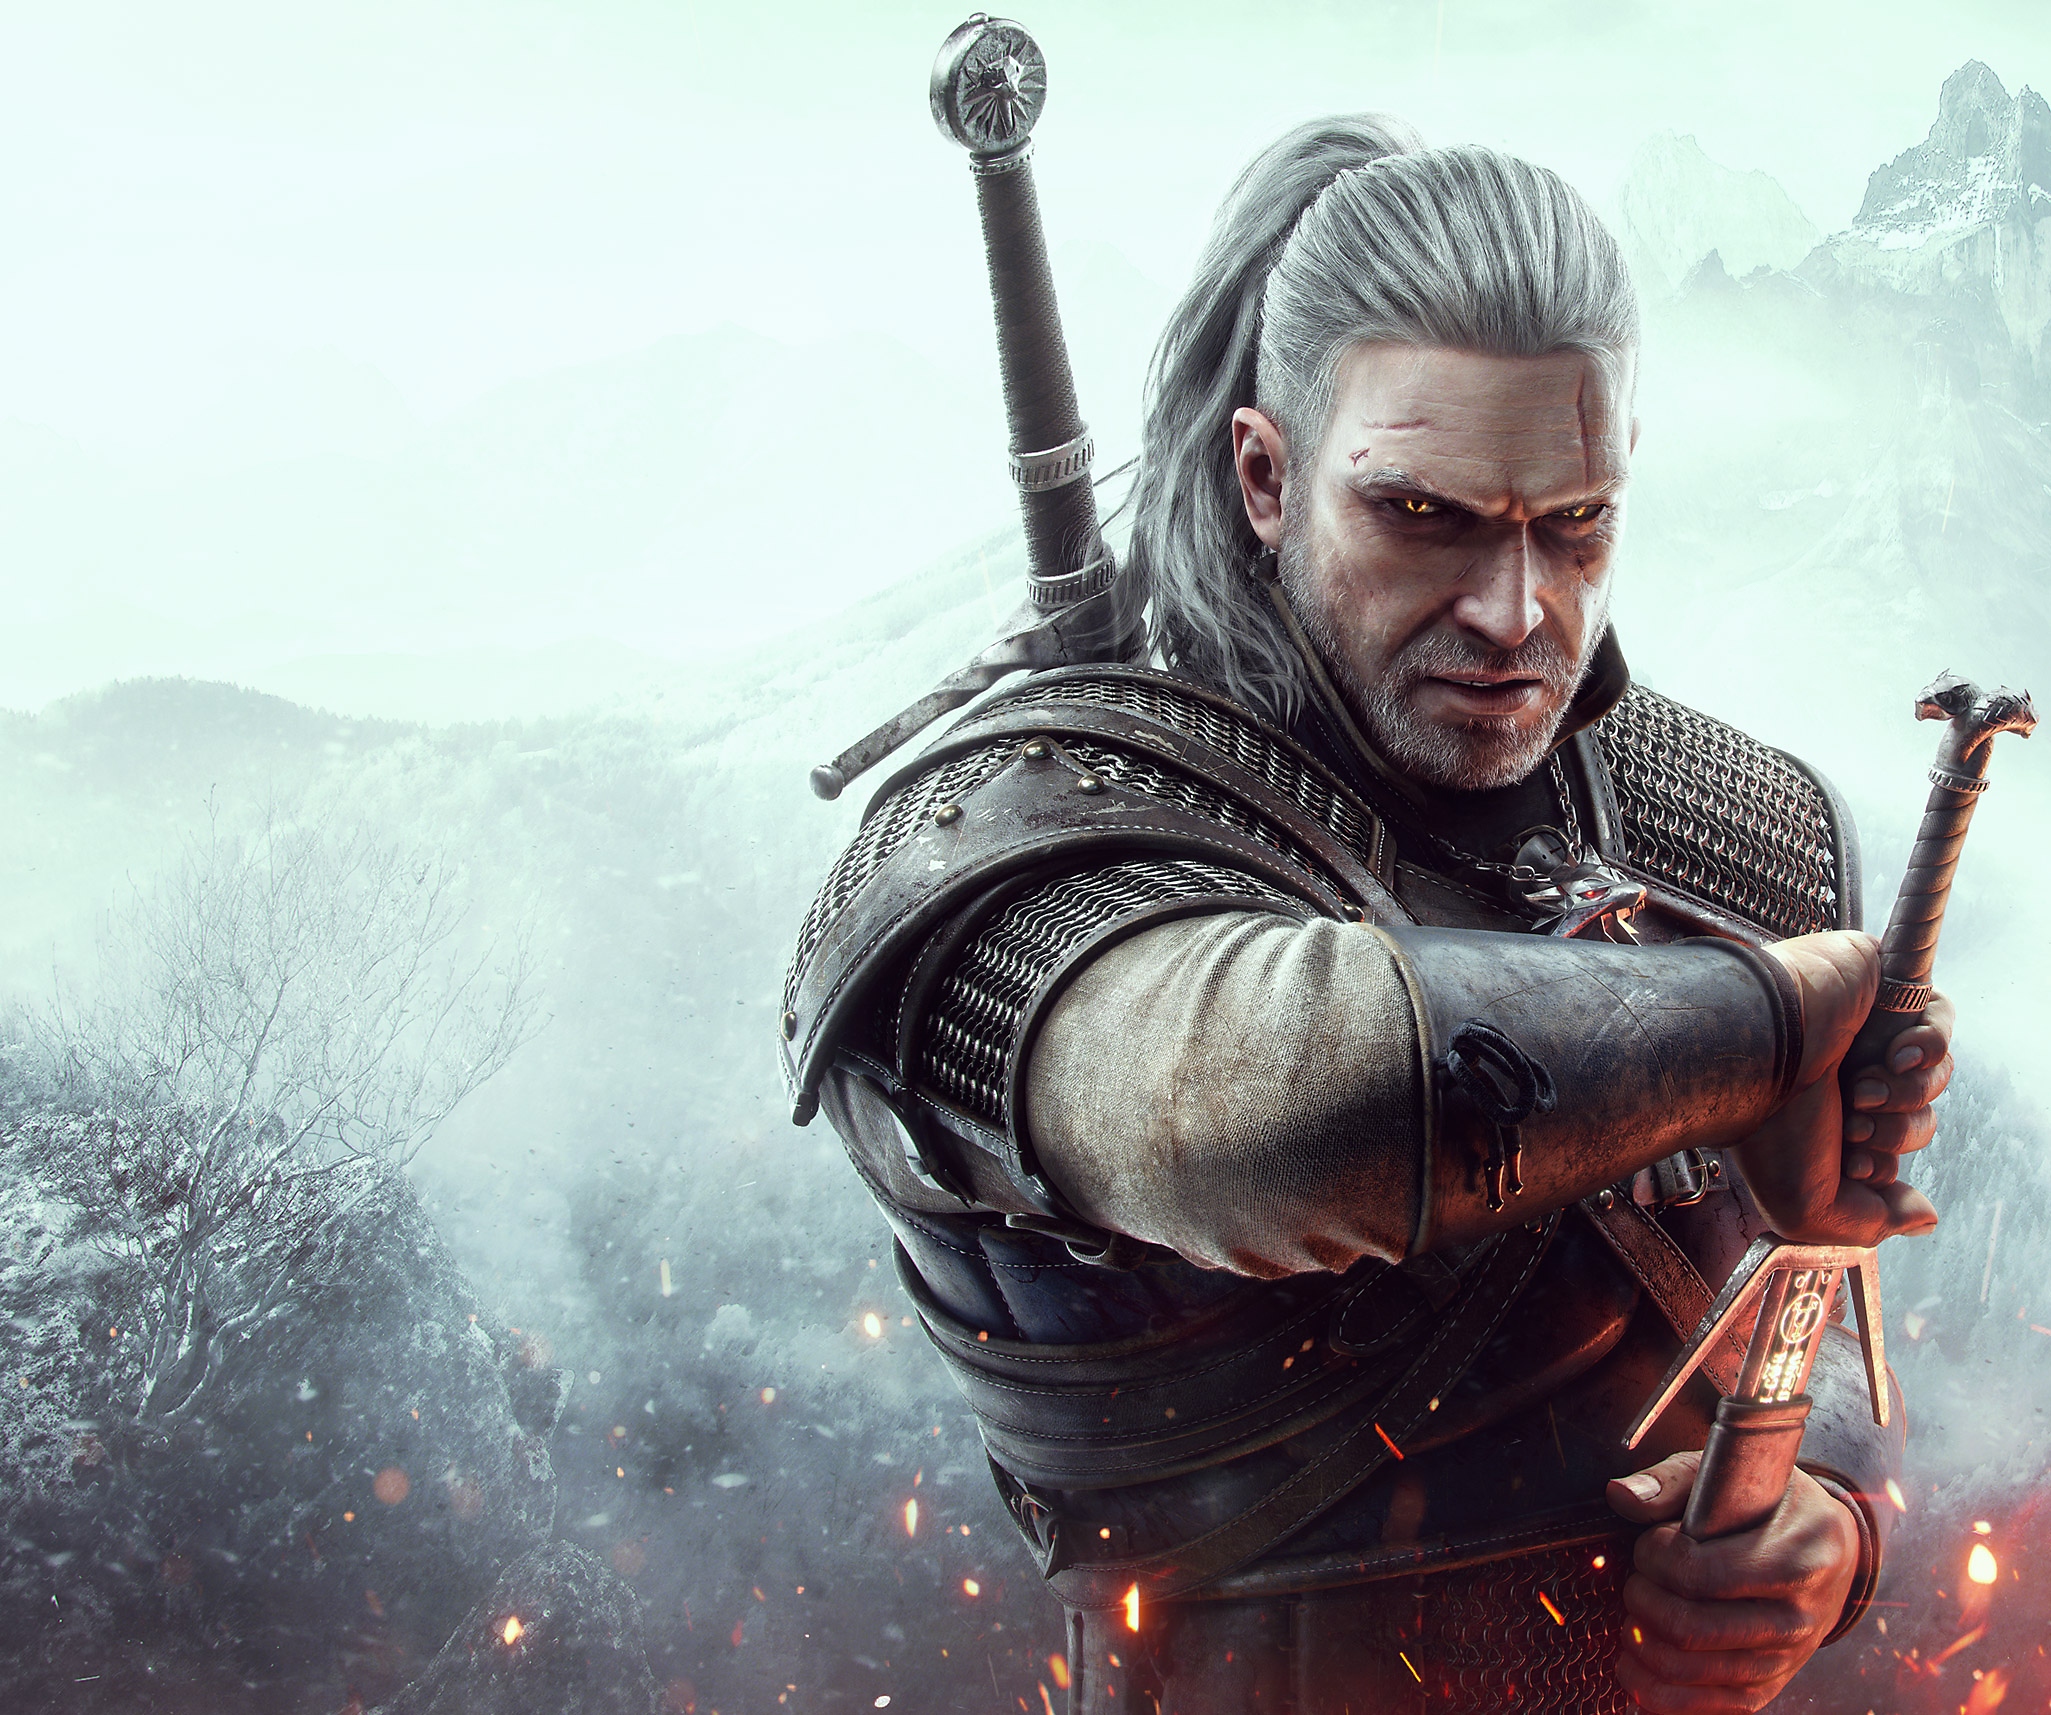 Arte principal de The Witcher 3 que muestra al personaje principal, Geralt de Rivia, desenvainando la espada.